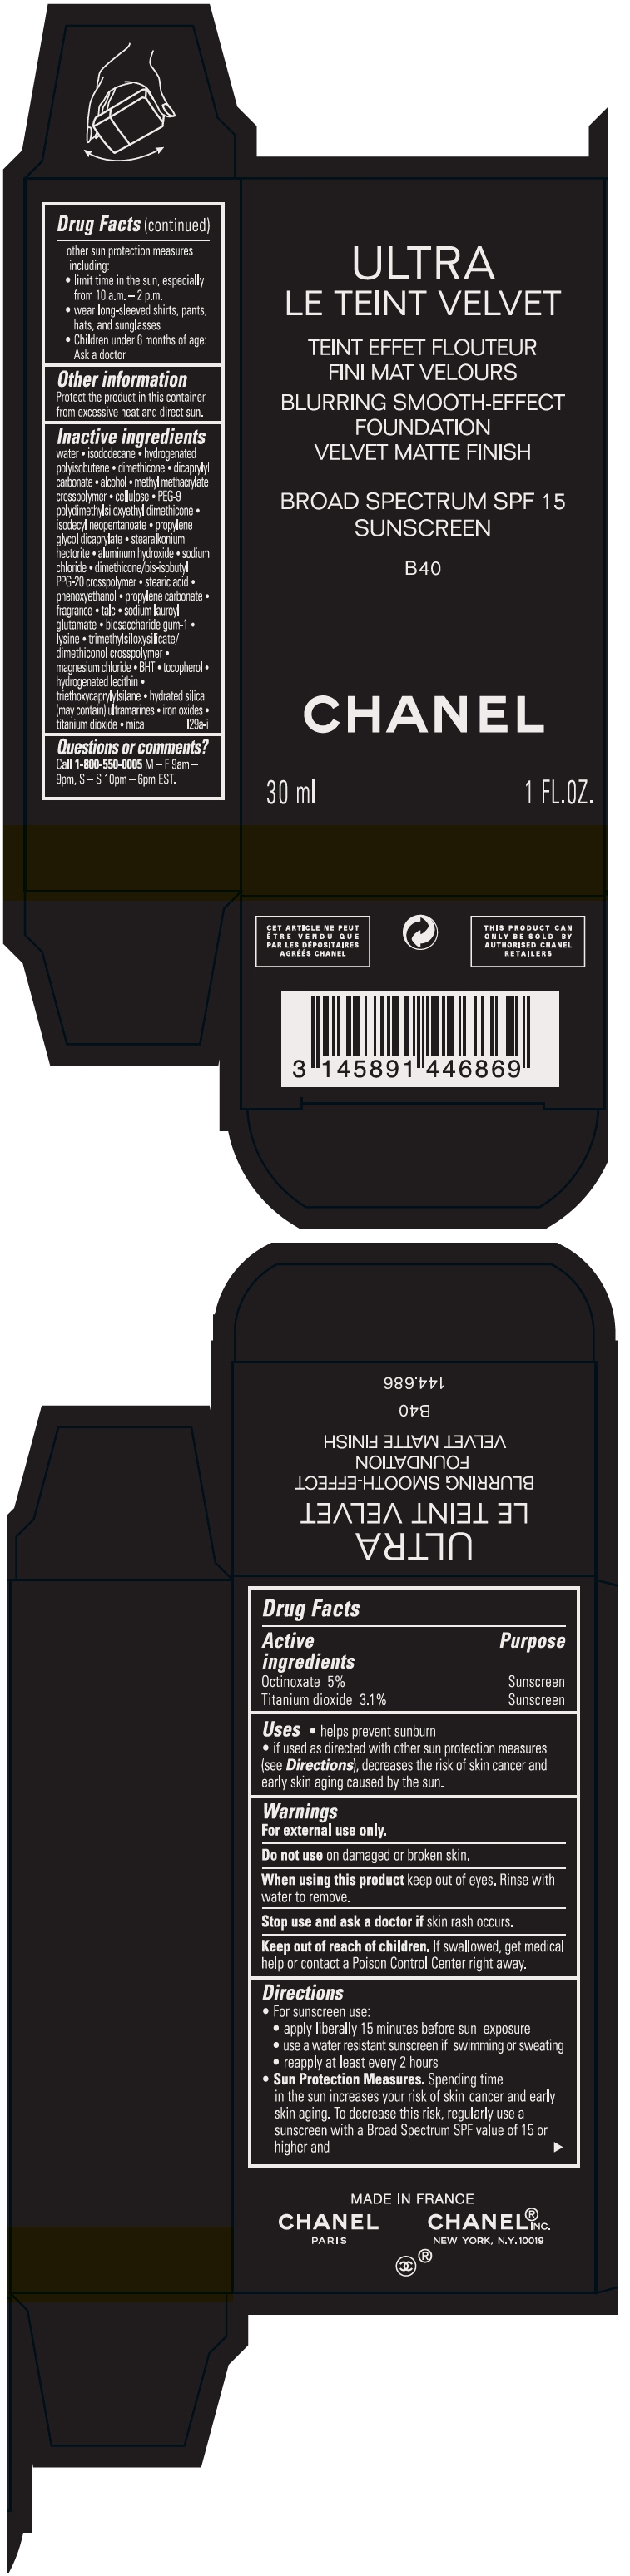 PRINCIPAL DISPLAY PANEL - 30 ml Bottle Carton - B40